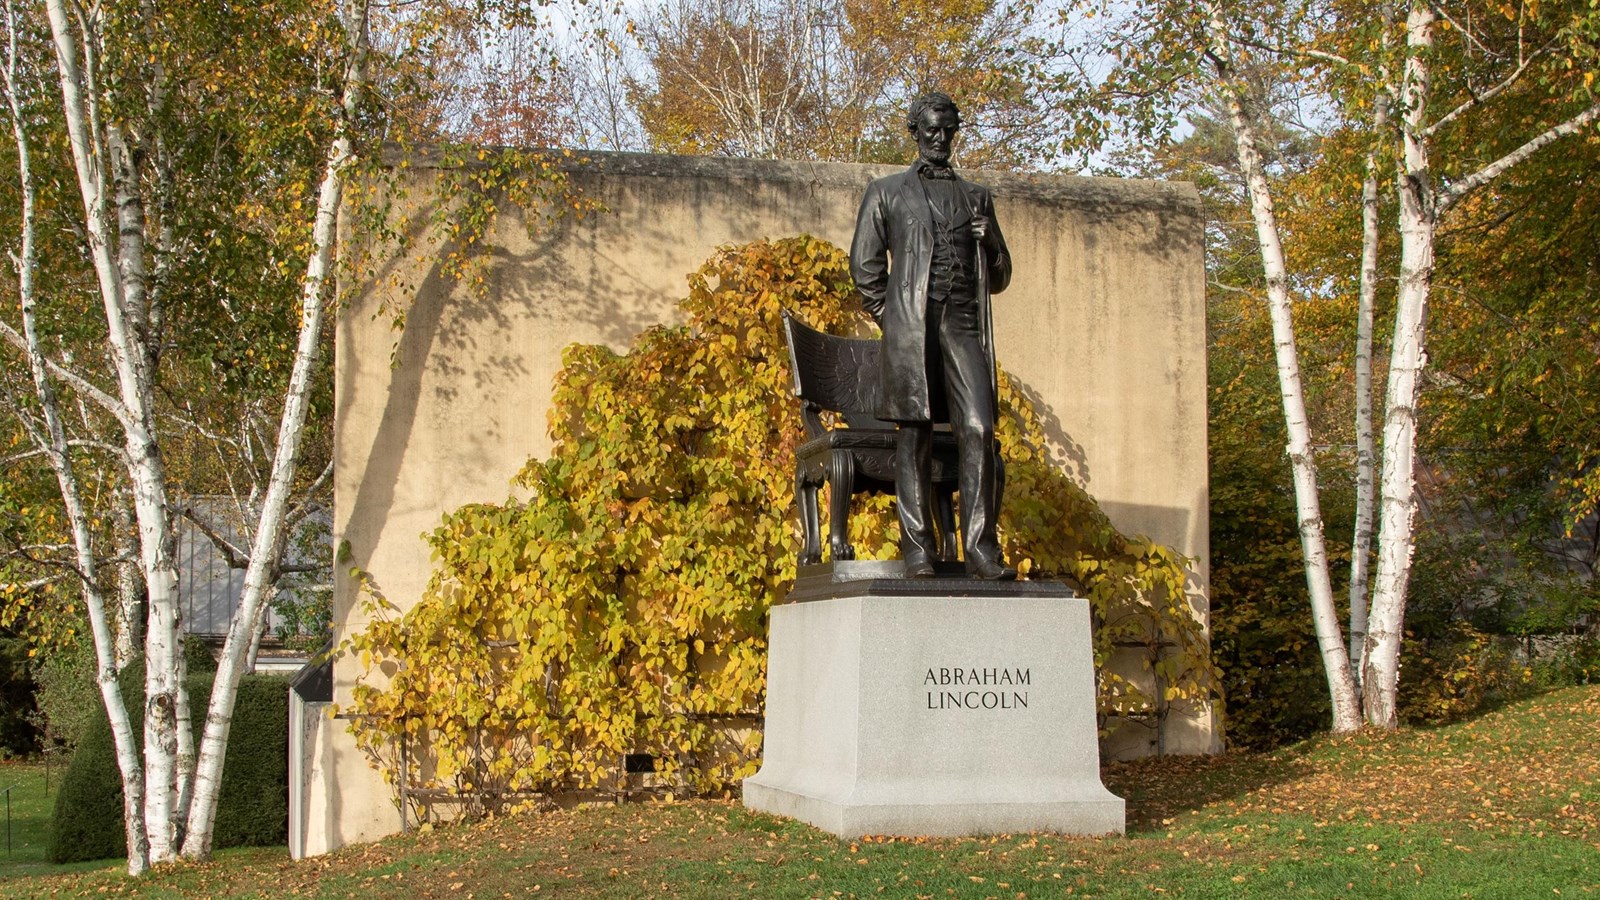 bronze sculpture of Abraham Lincoln